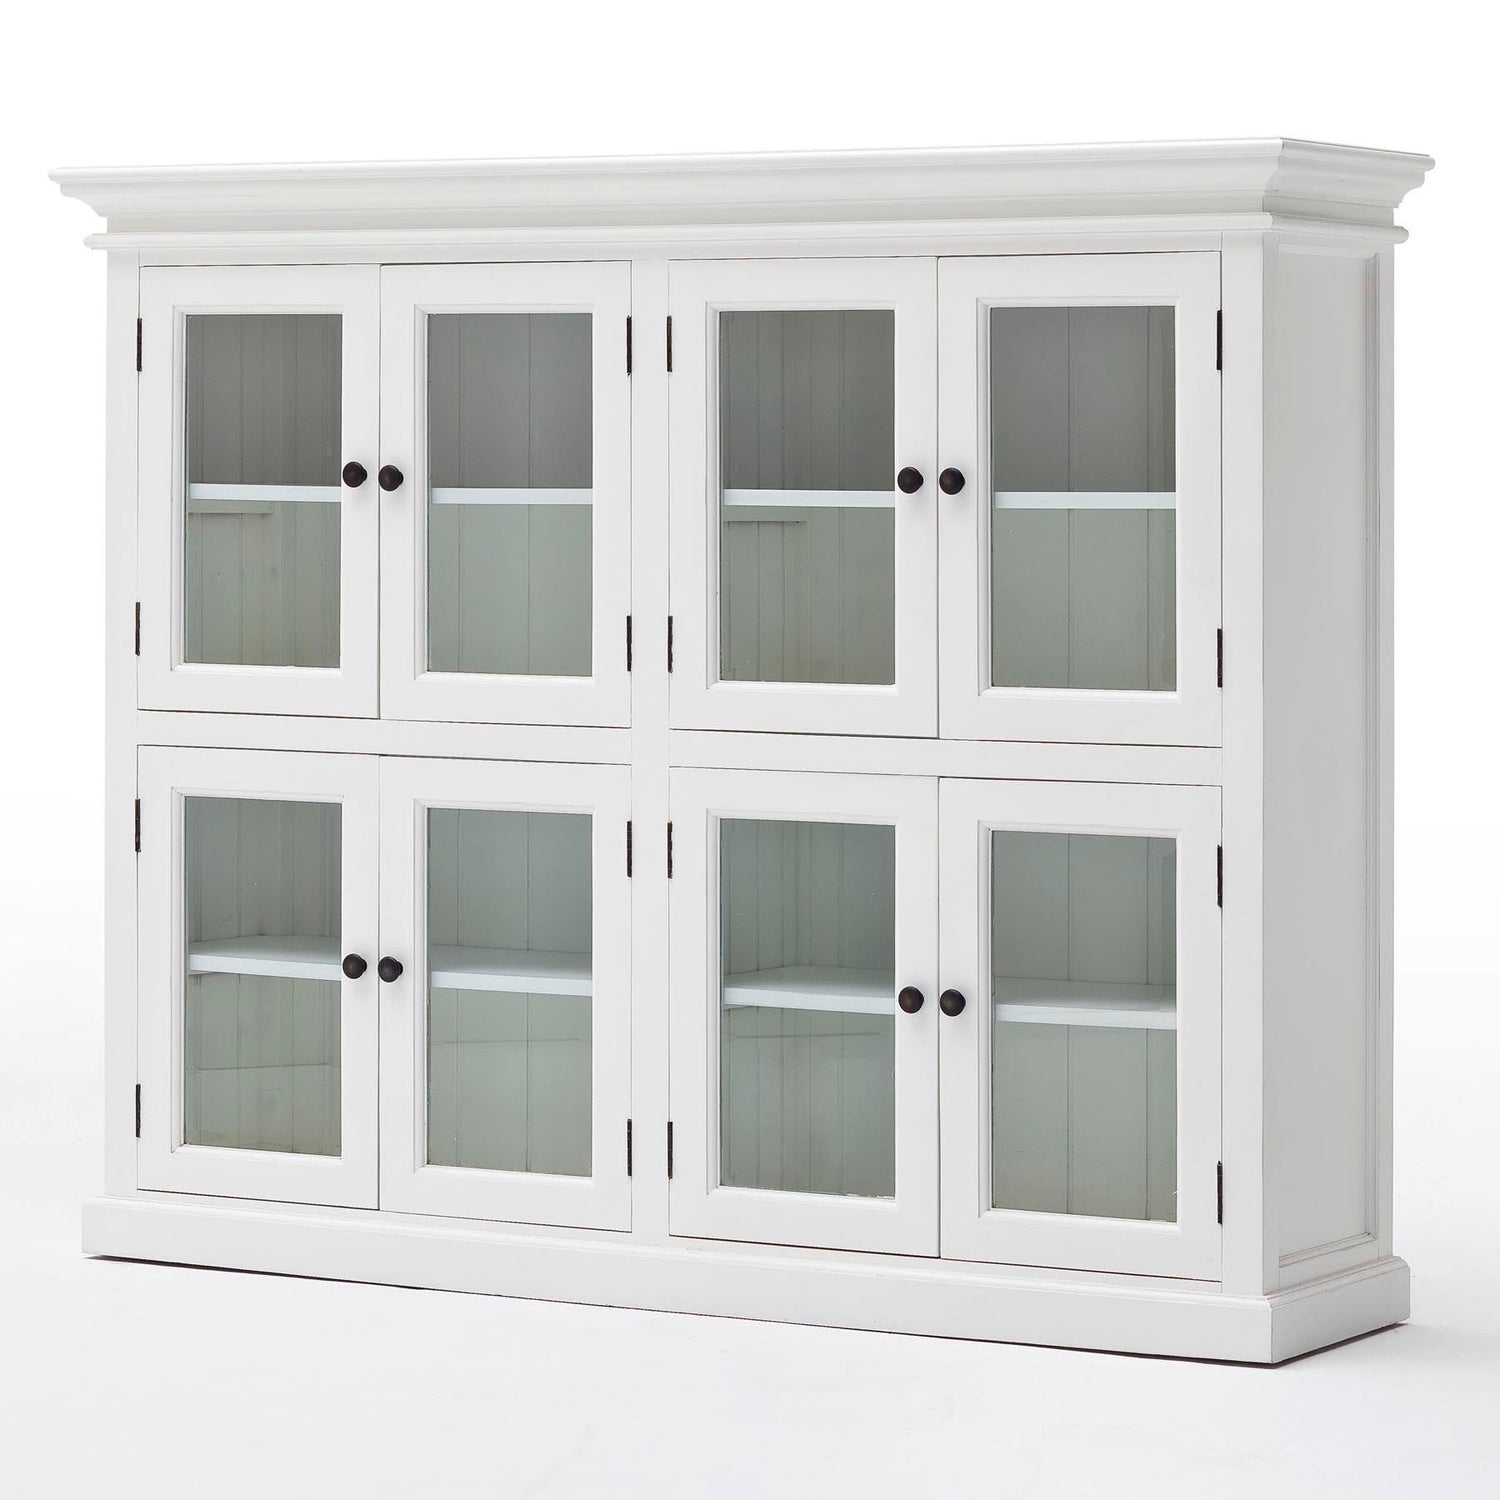 Halifax display cabinet with 8 glass doors